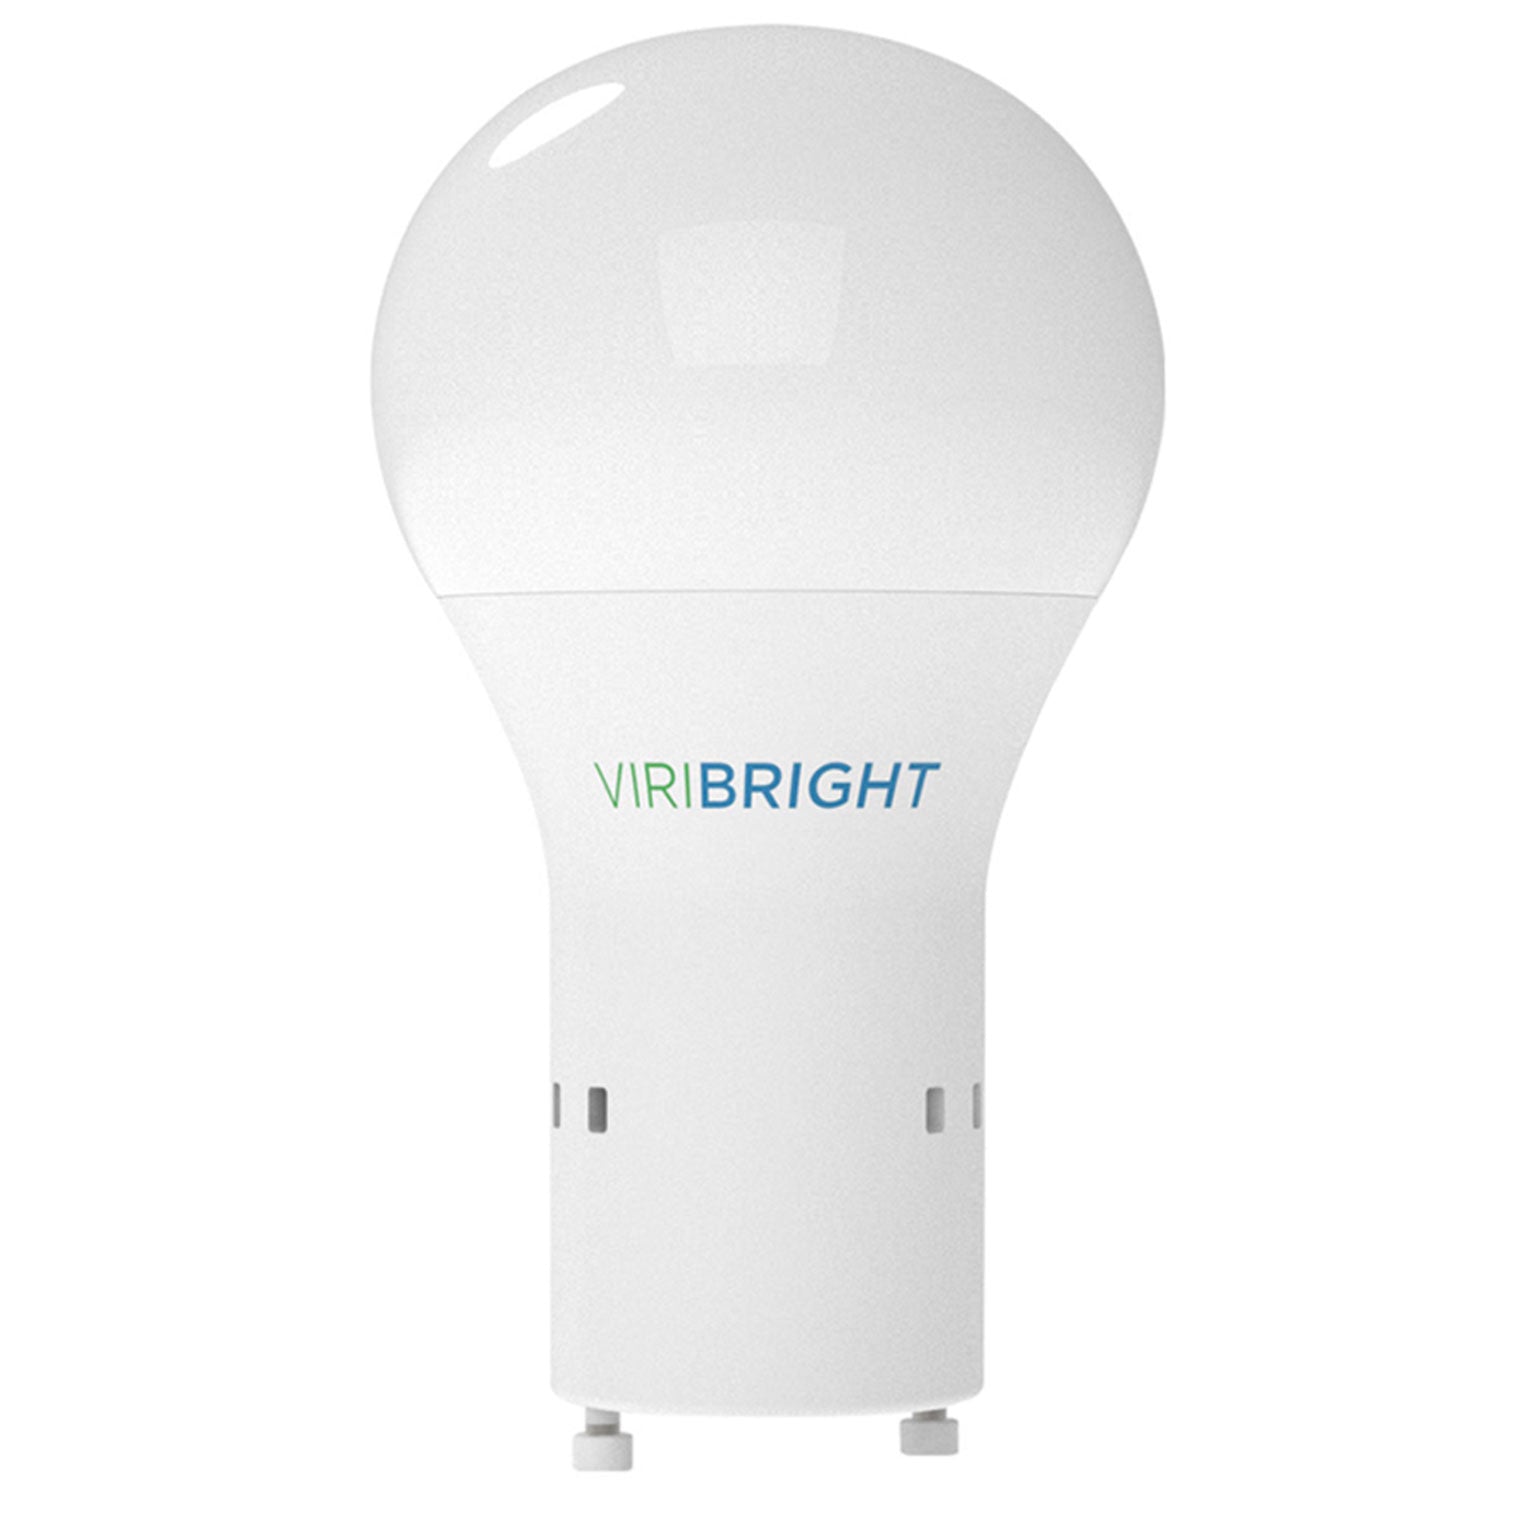 A single A19 shape bulb GU26 Pase LED light bulb from a Viribright Pro Pack